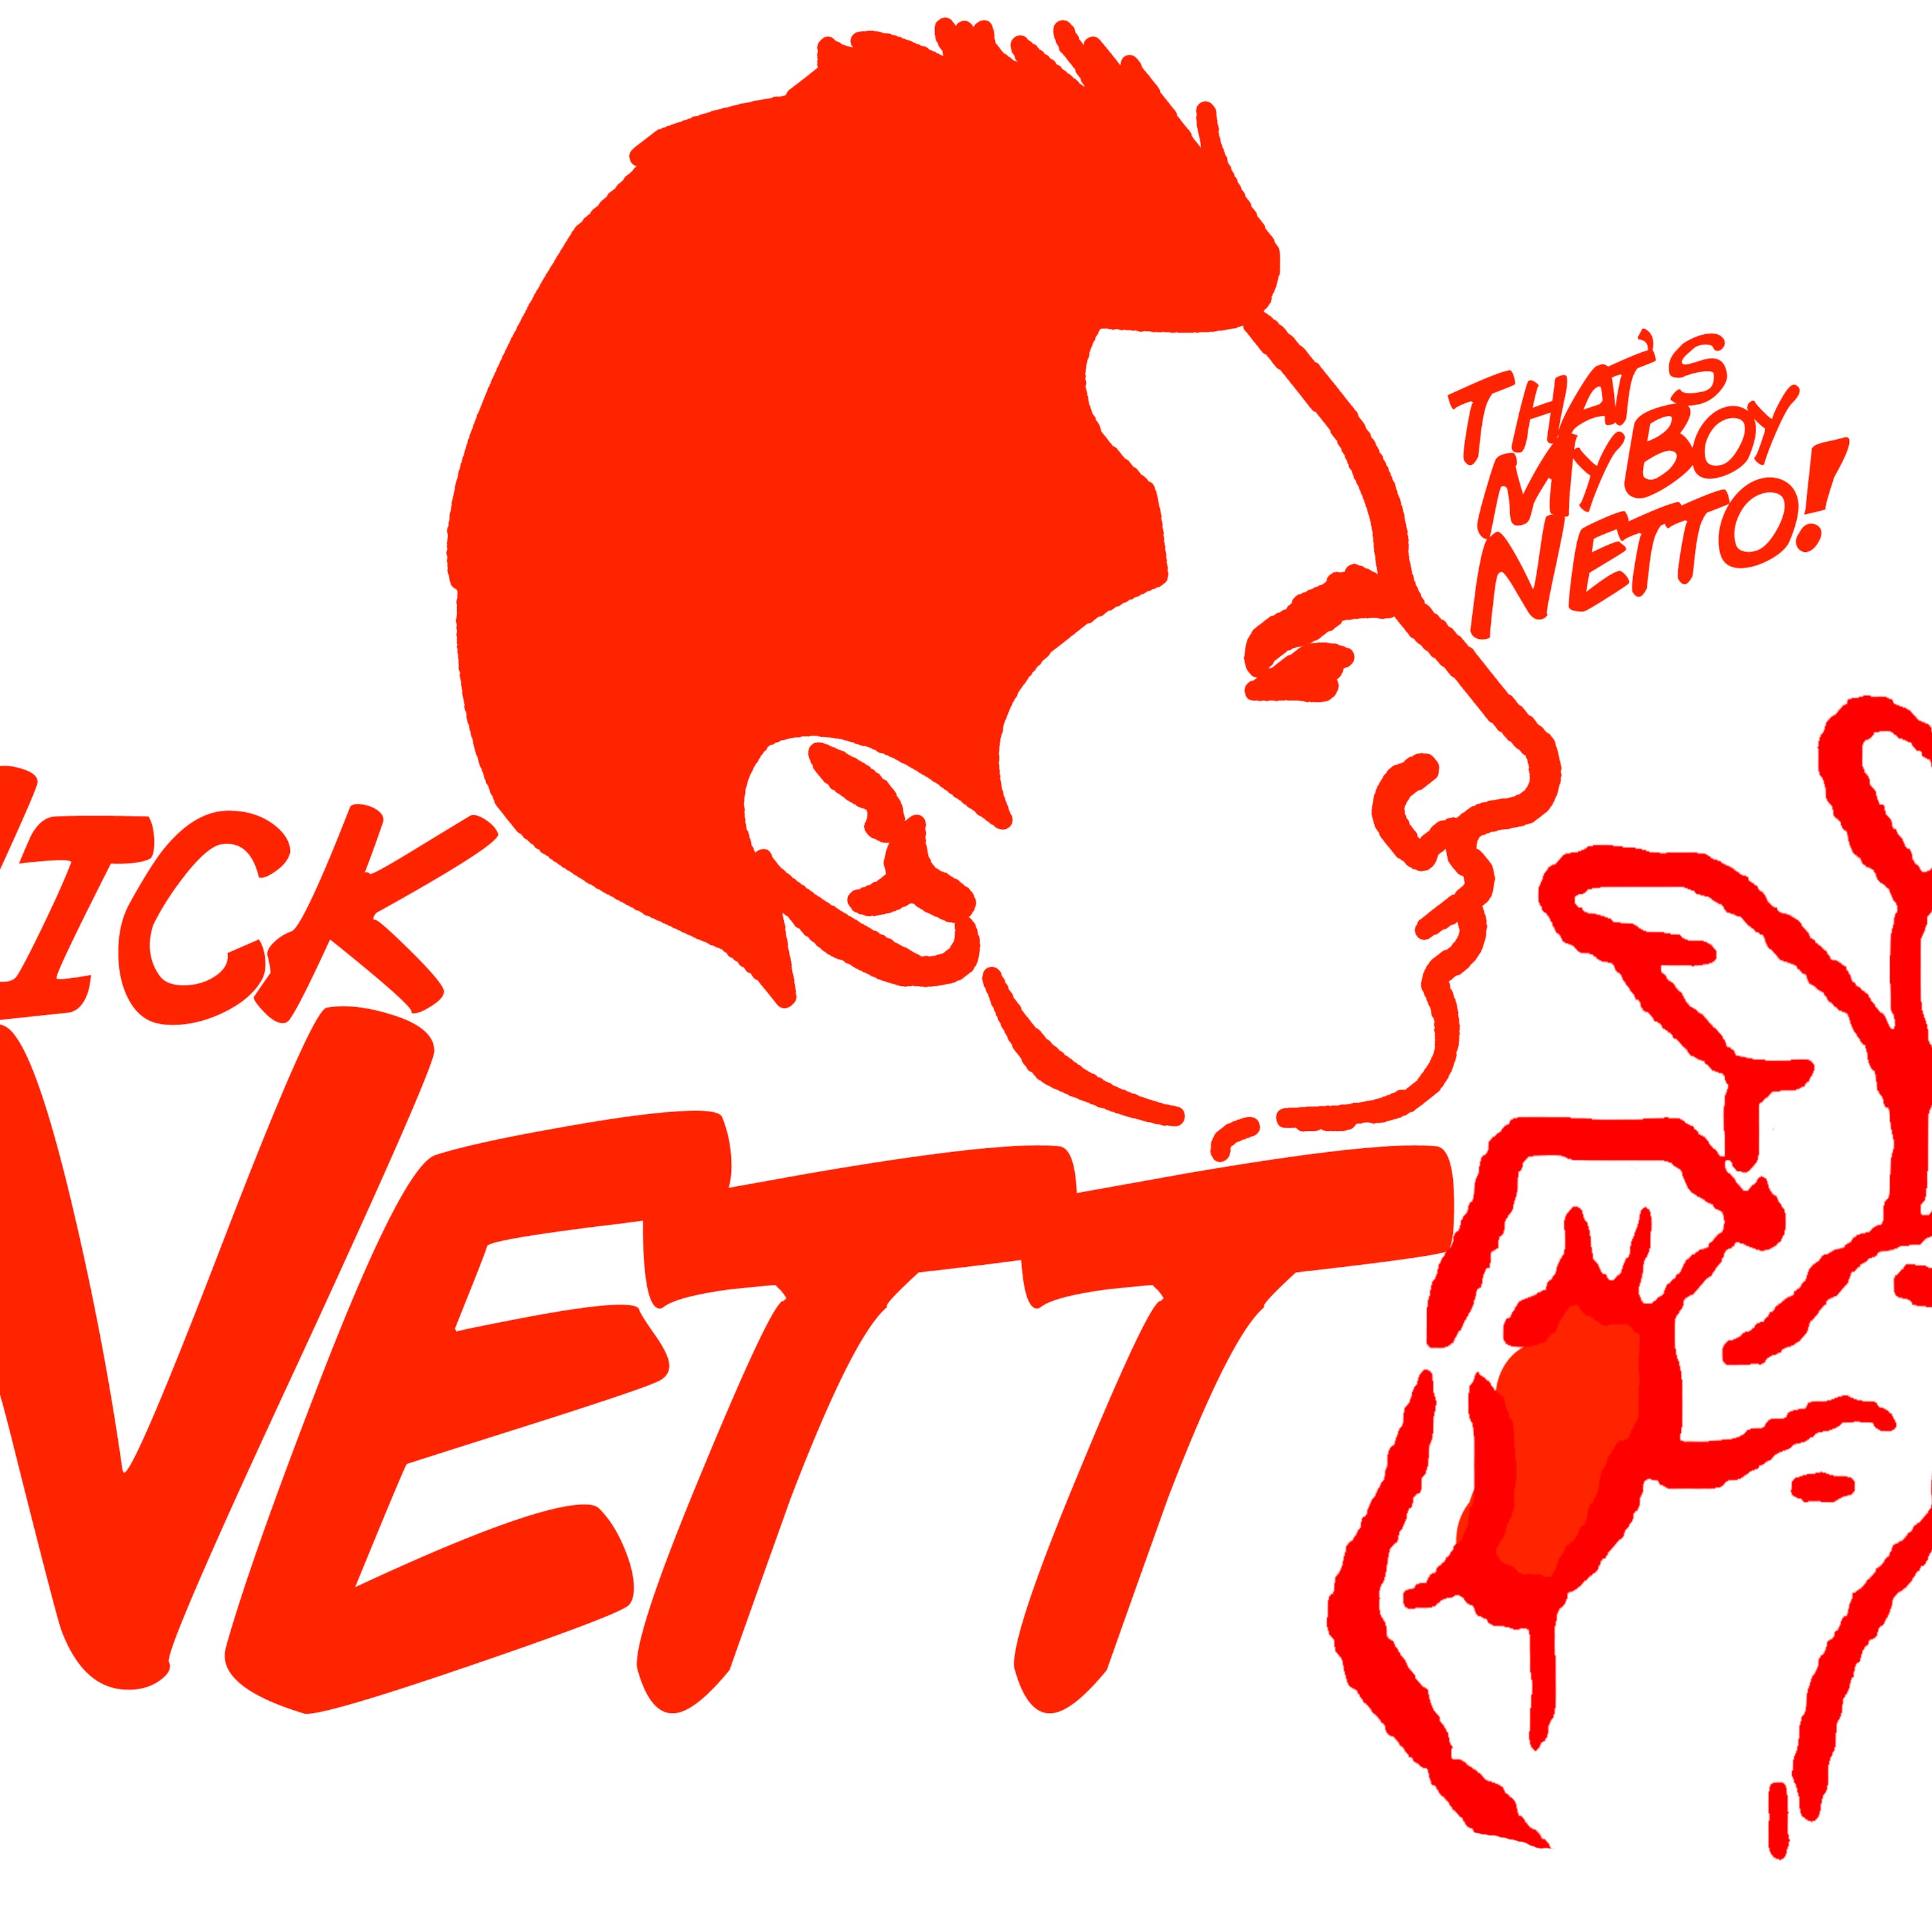 Nick Netto: The Night Shift